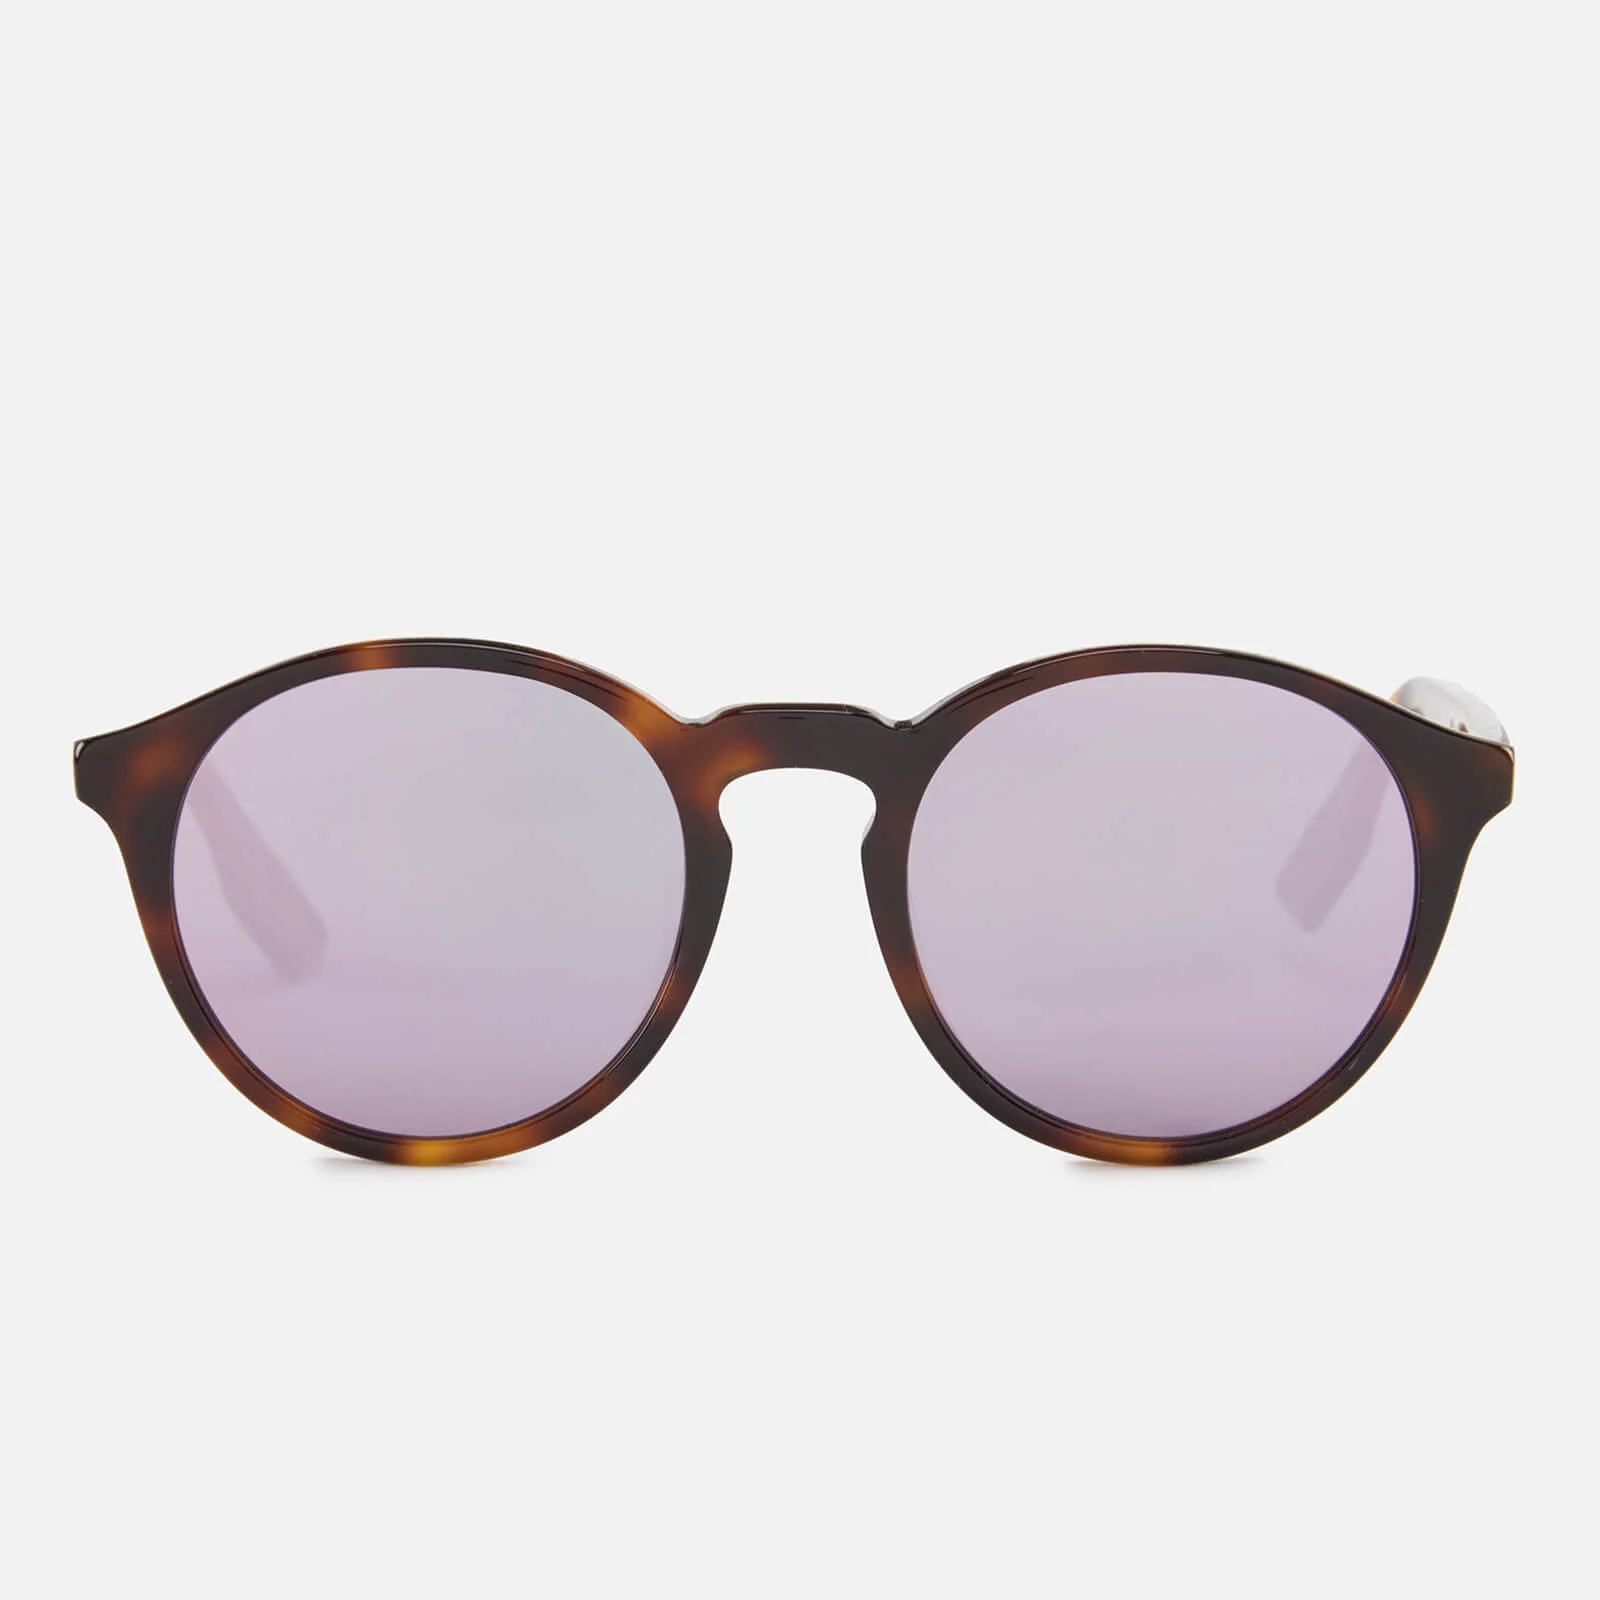 McQ Alexander McQueen Round Lens Sunglasses - Havana/Pink Image 1